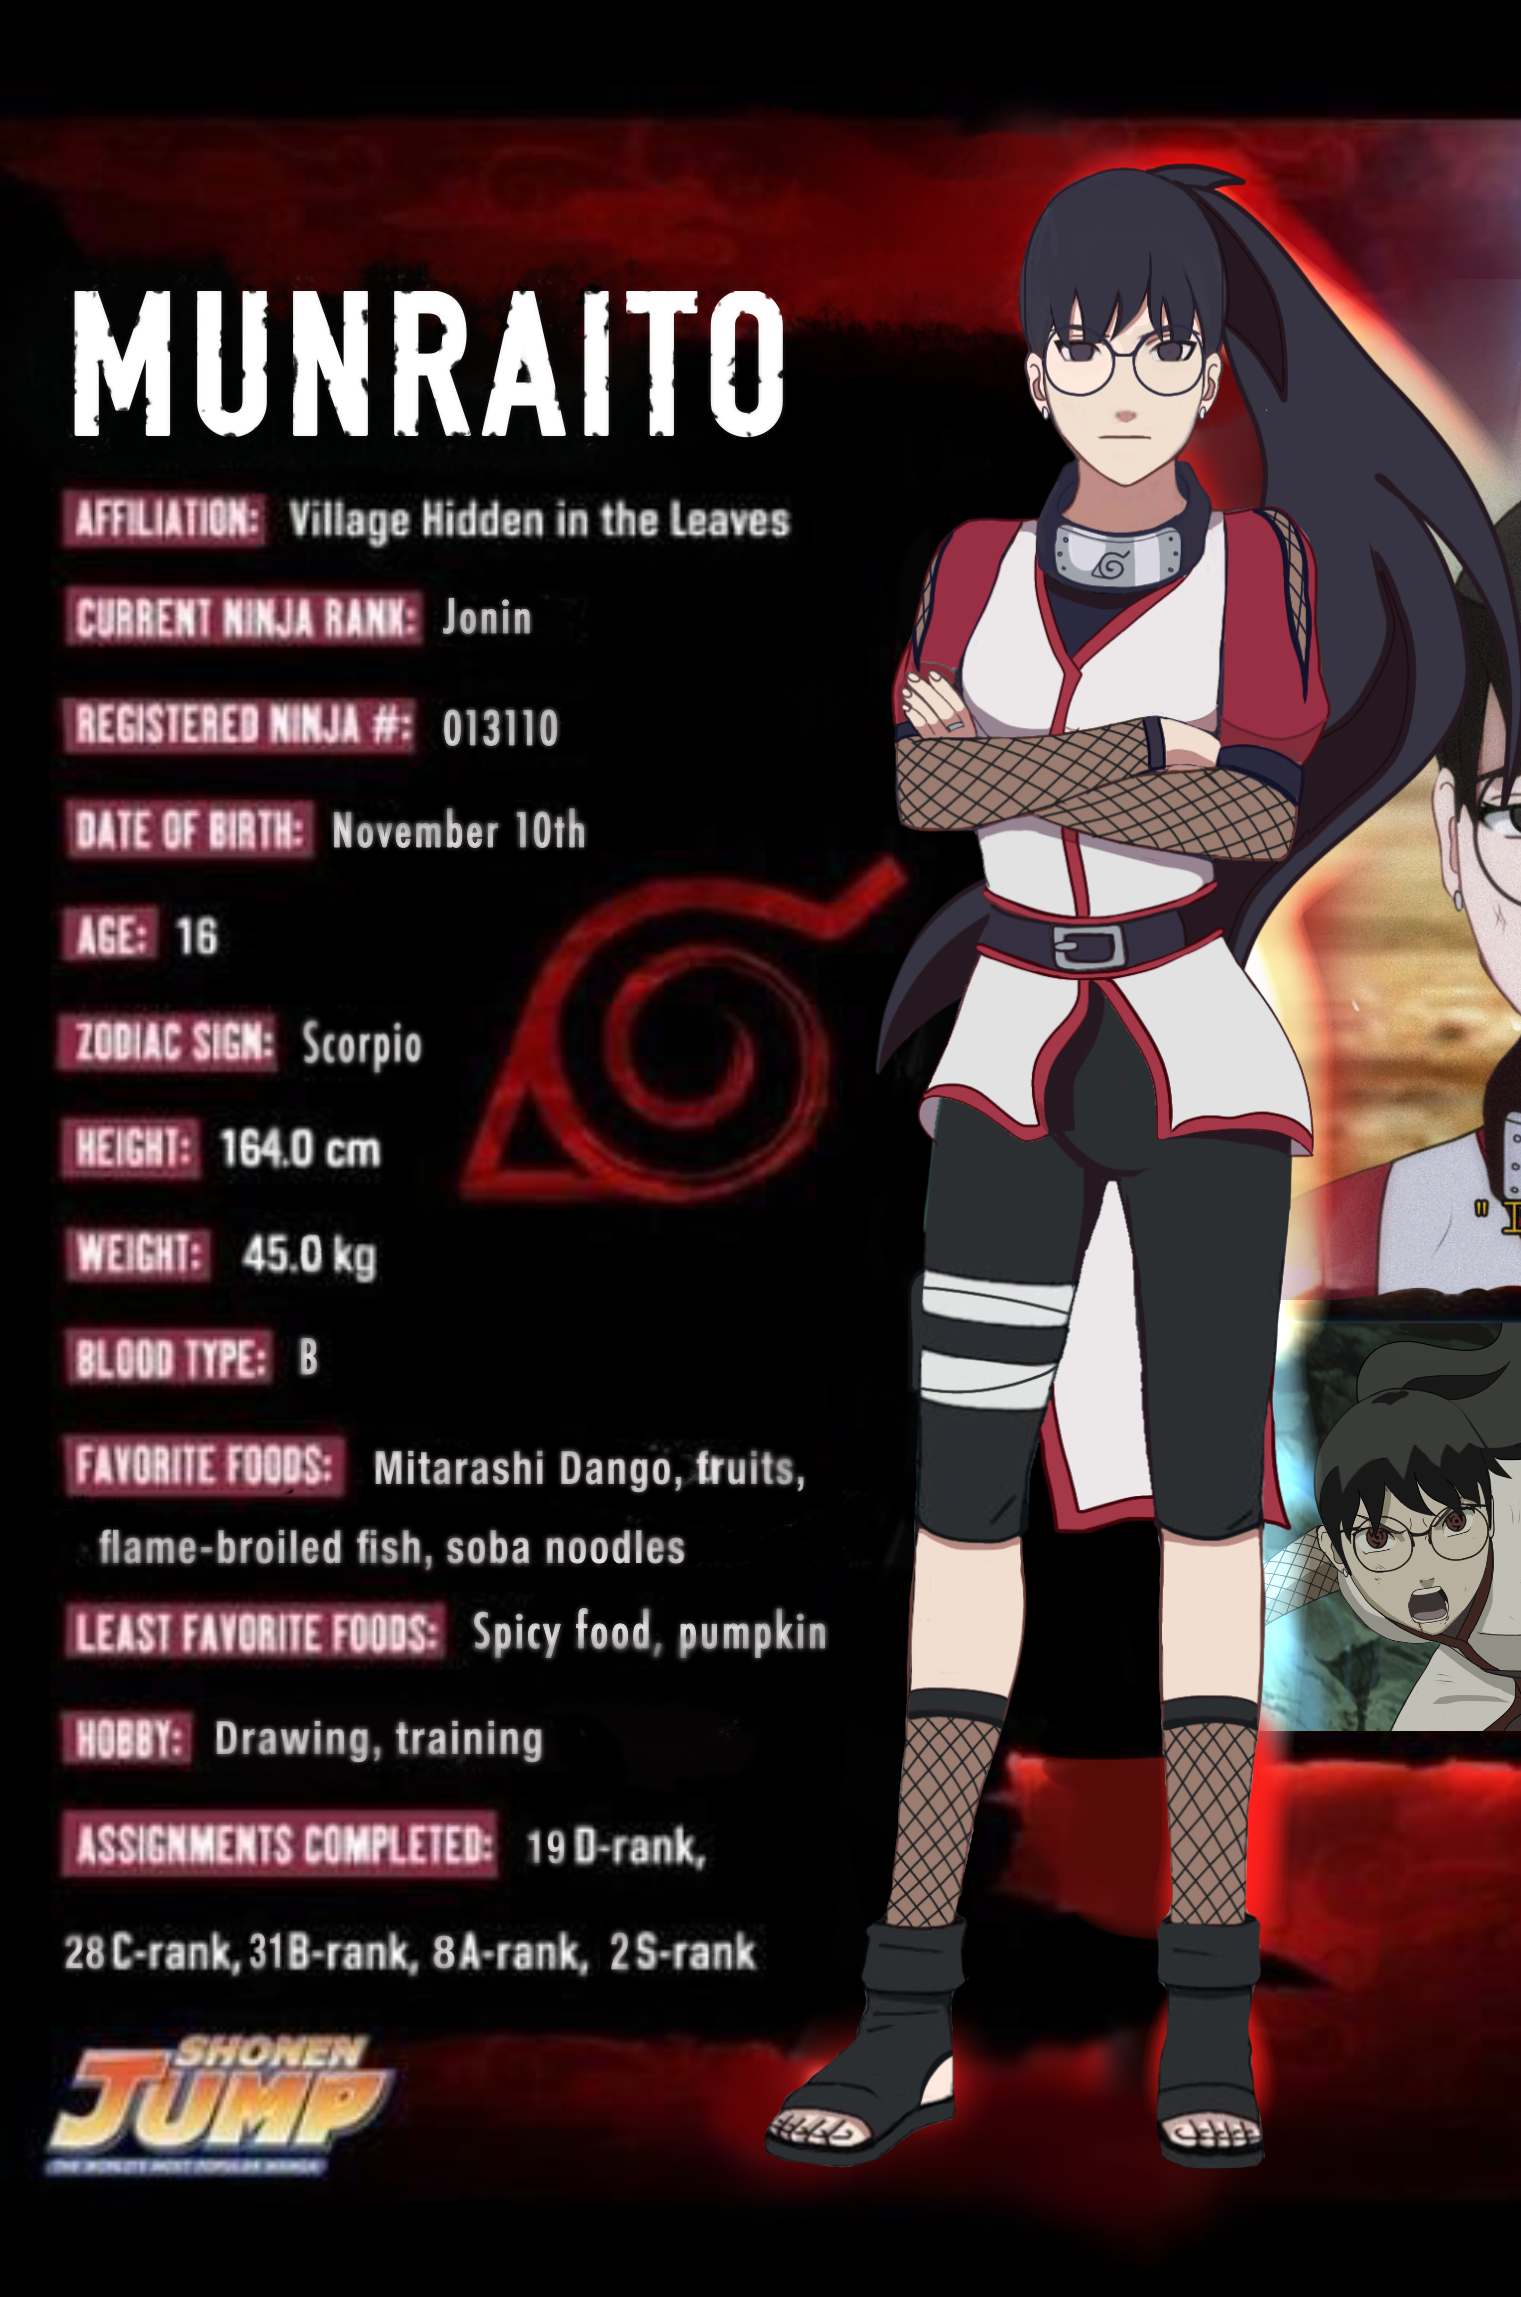 Character Stats - Naruto Otaku!